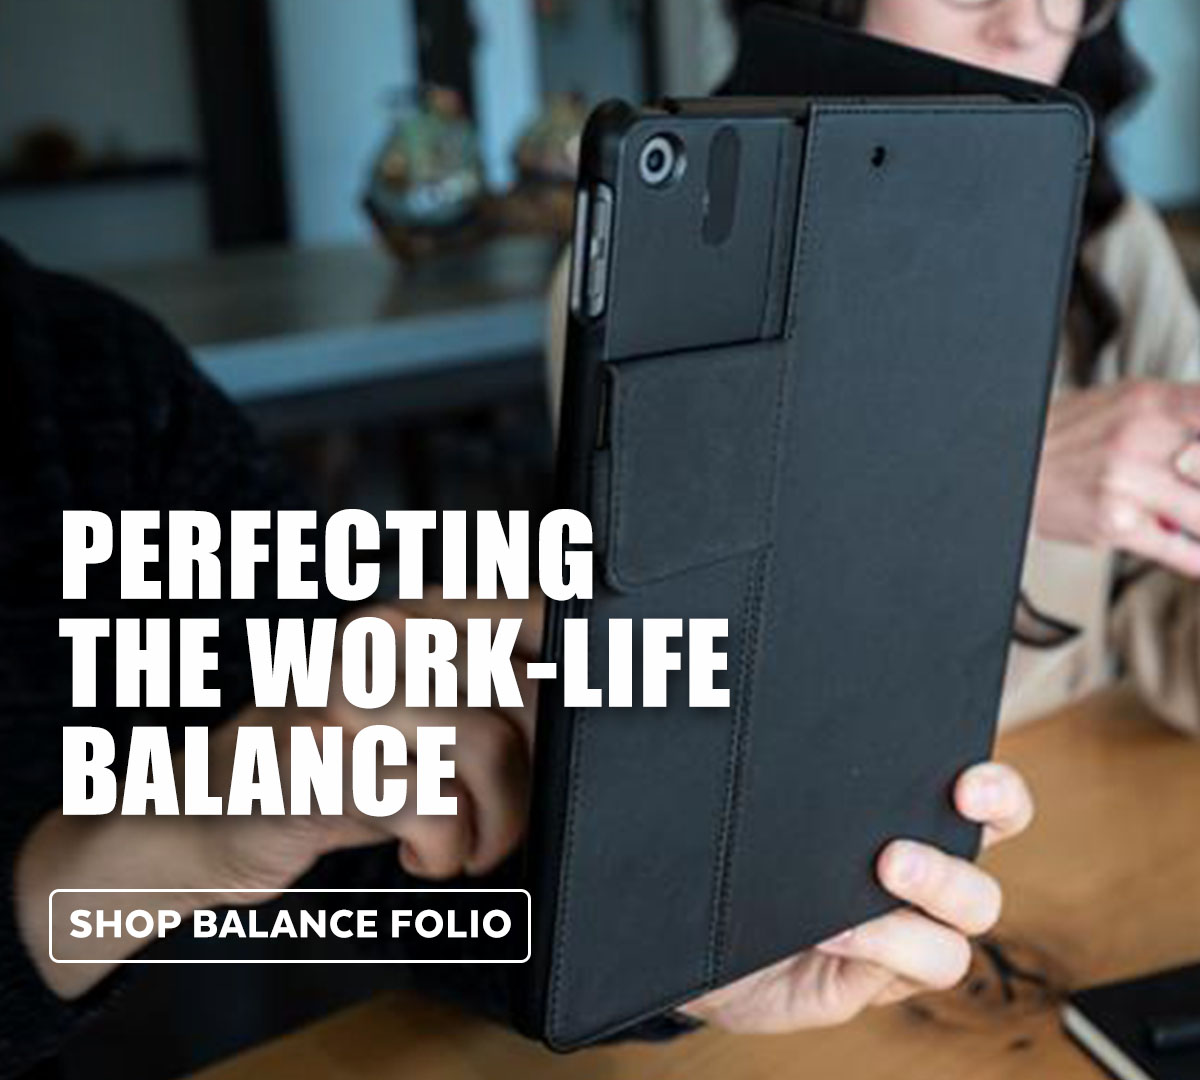 Perfecting the work-life balance. Shop Balance folio